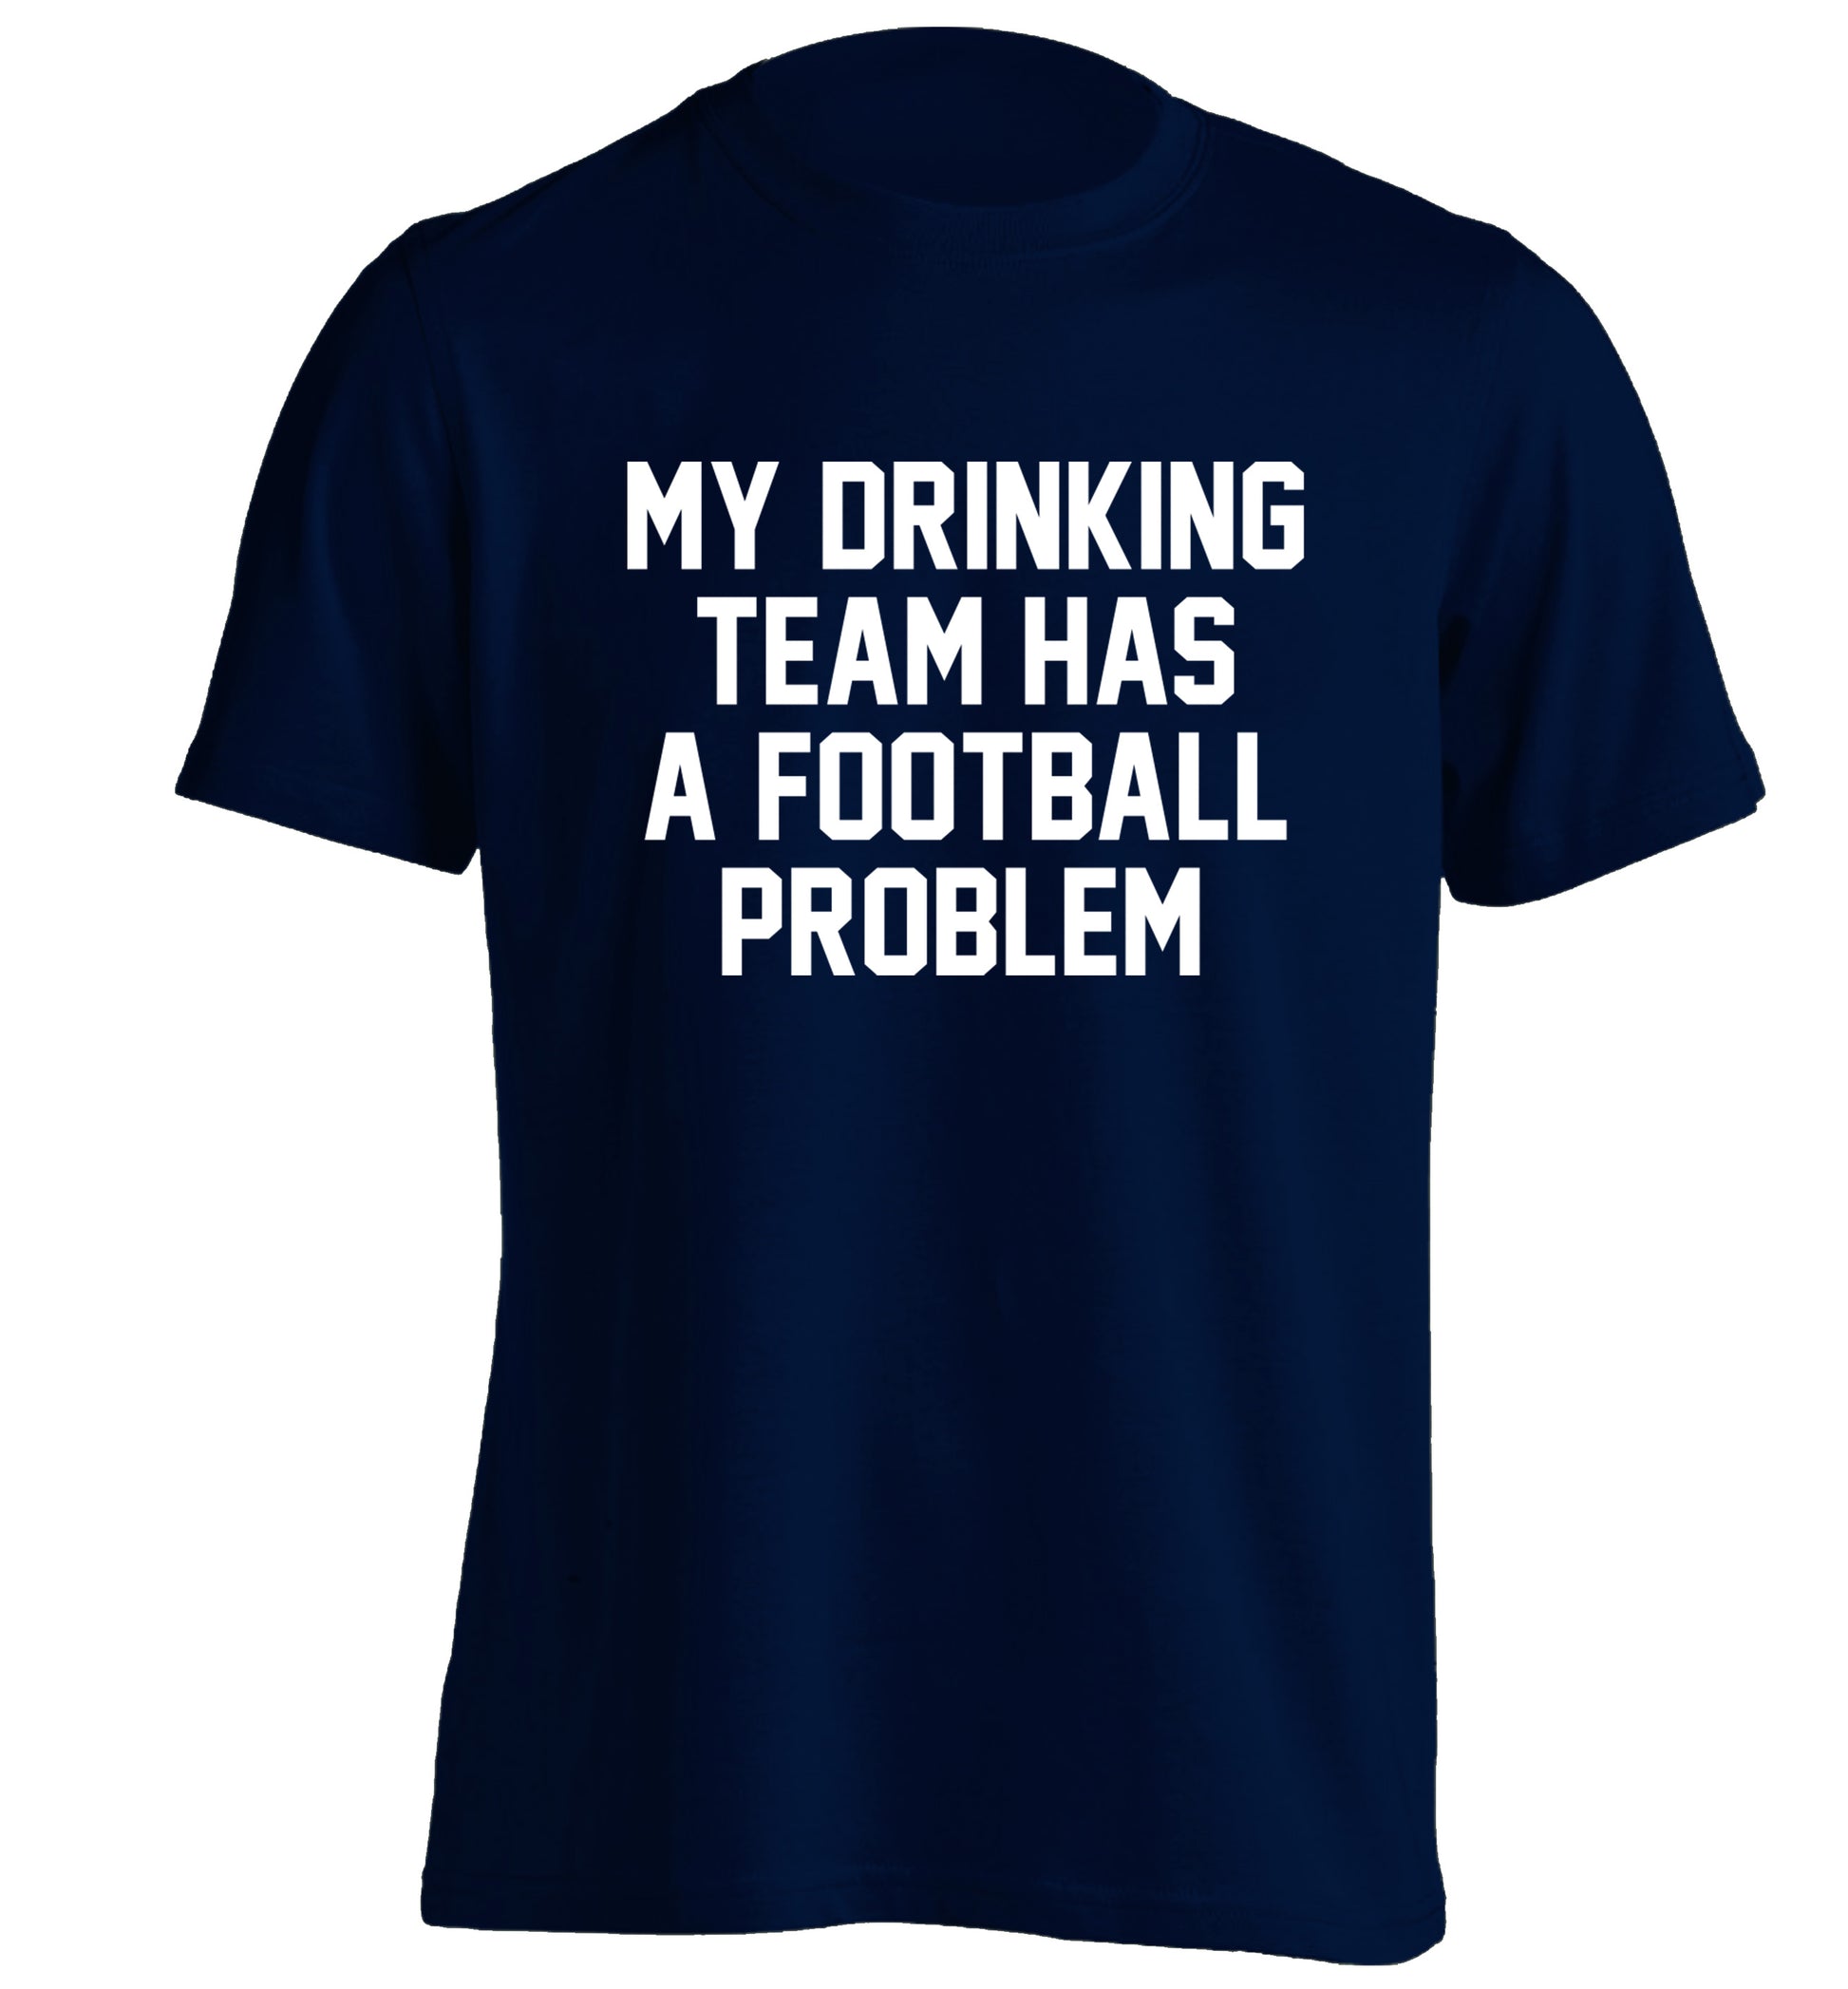 My drinking team has a football problem! adults unisexnavy Tshirt 2XL